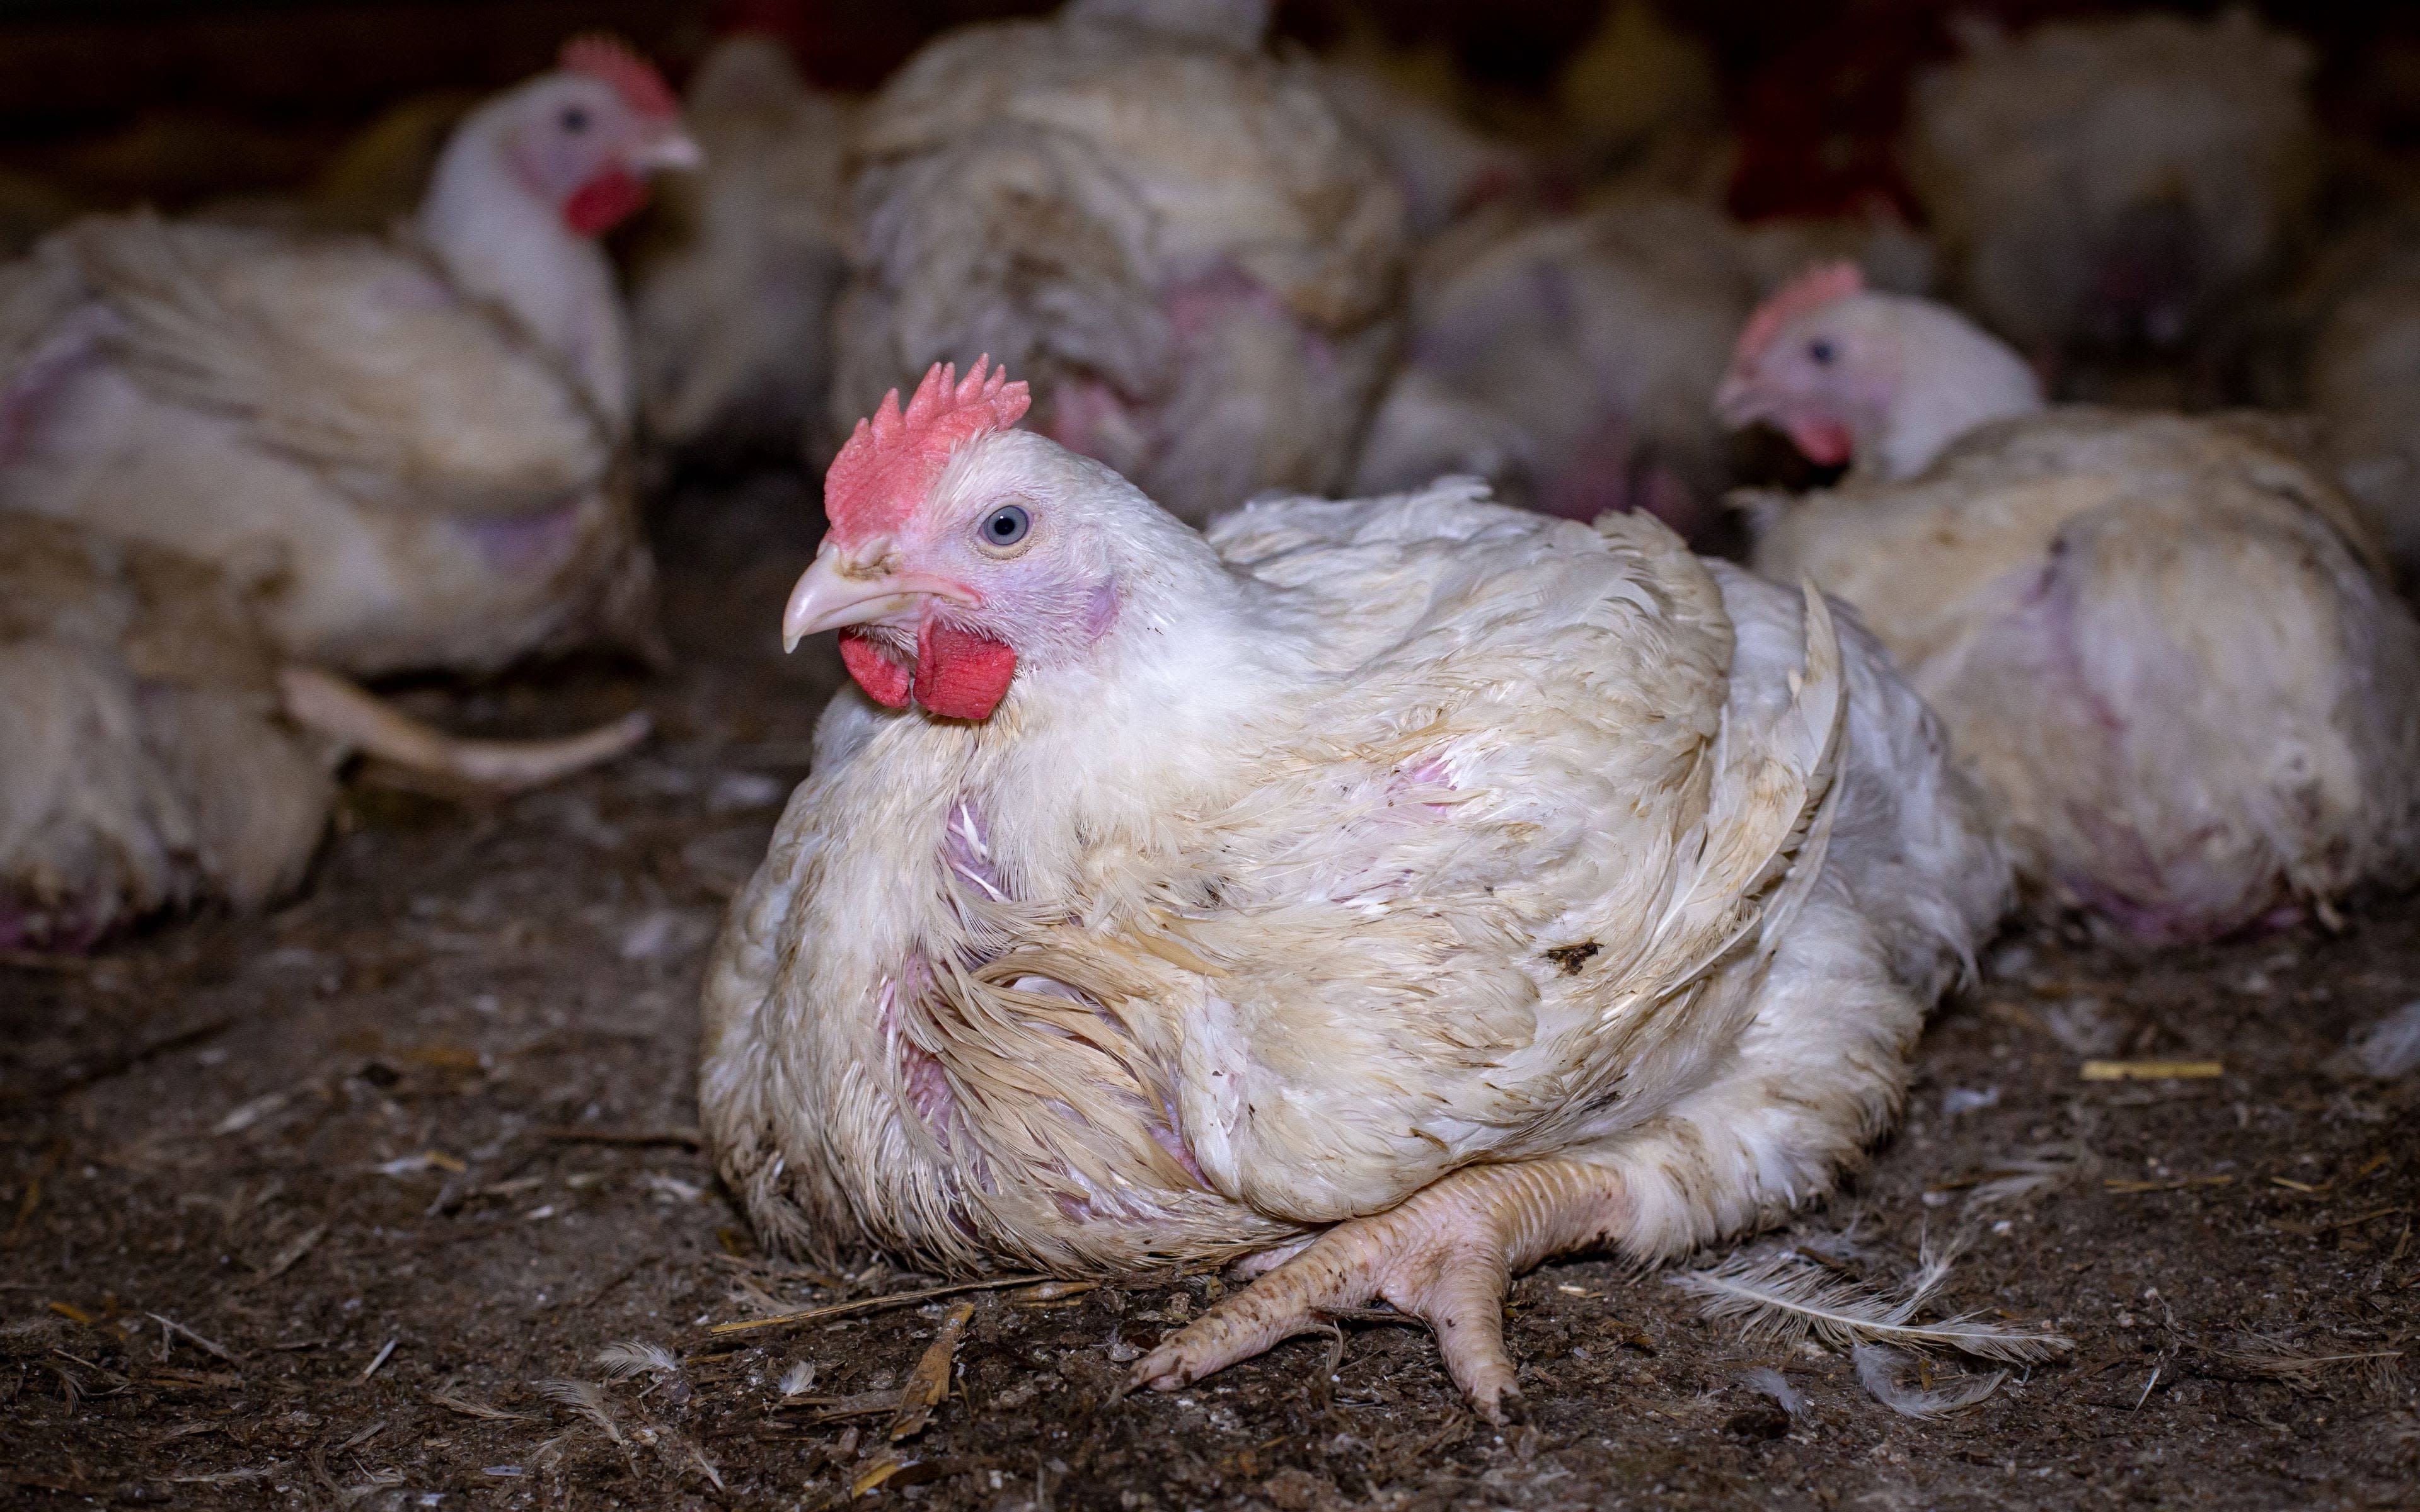 Better breader belt life boosts poultry line productivity